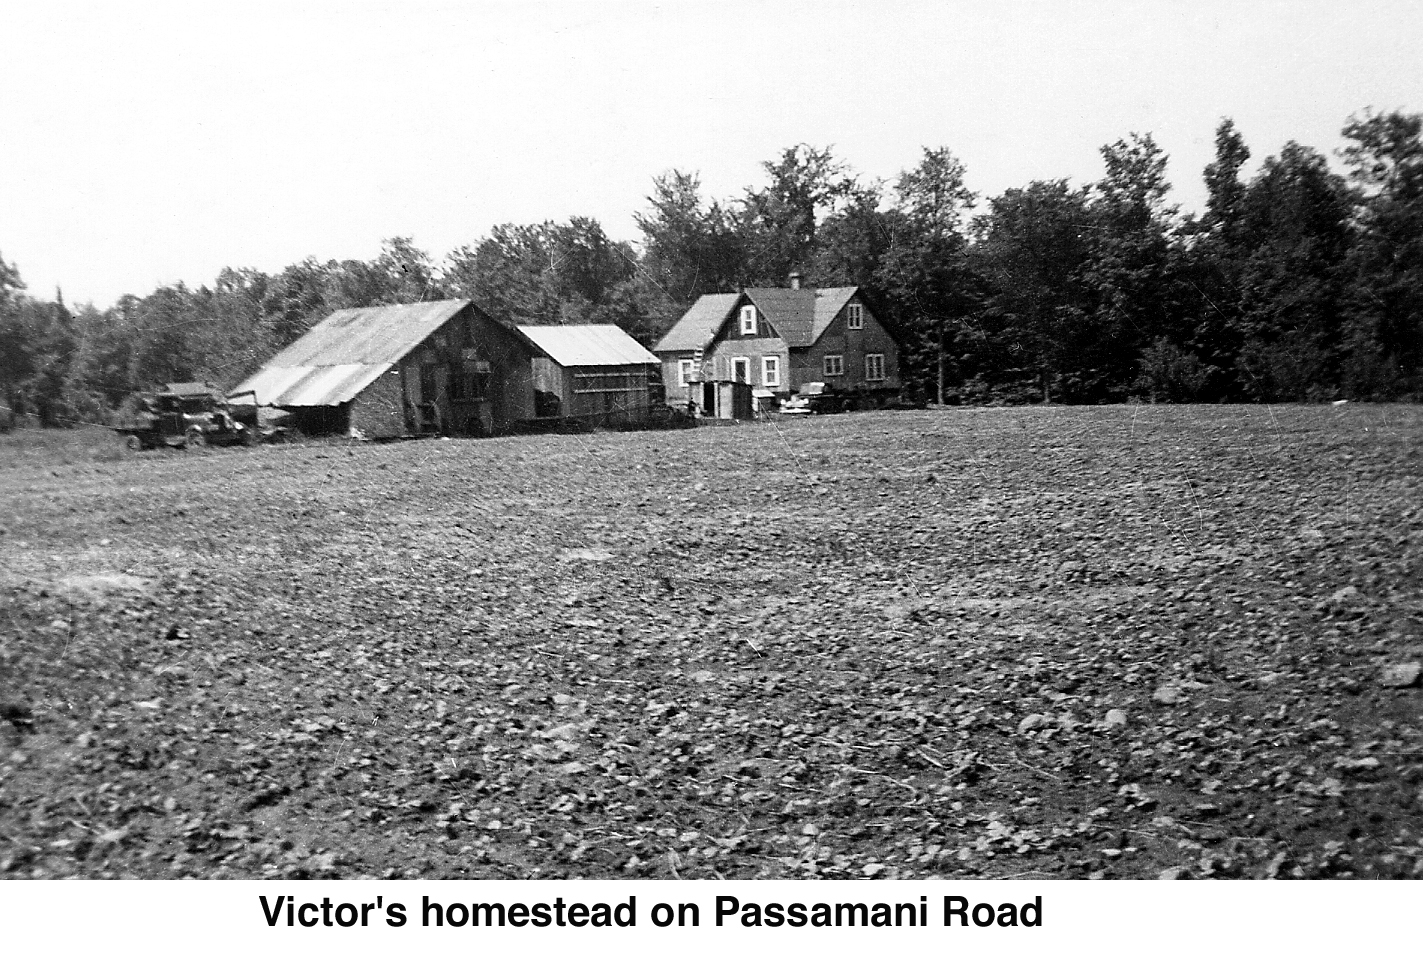 Victor Holm's homestead